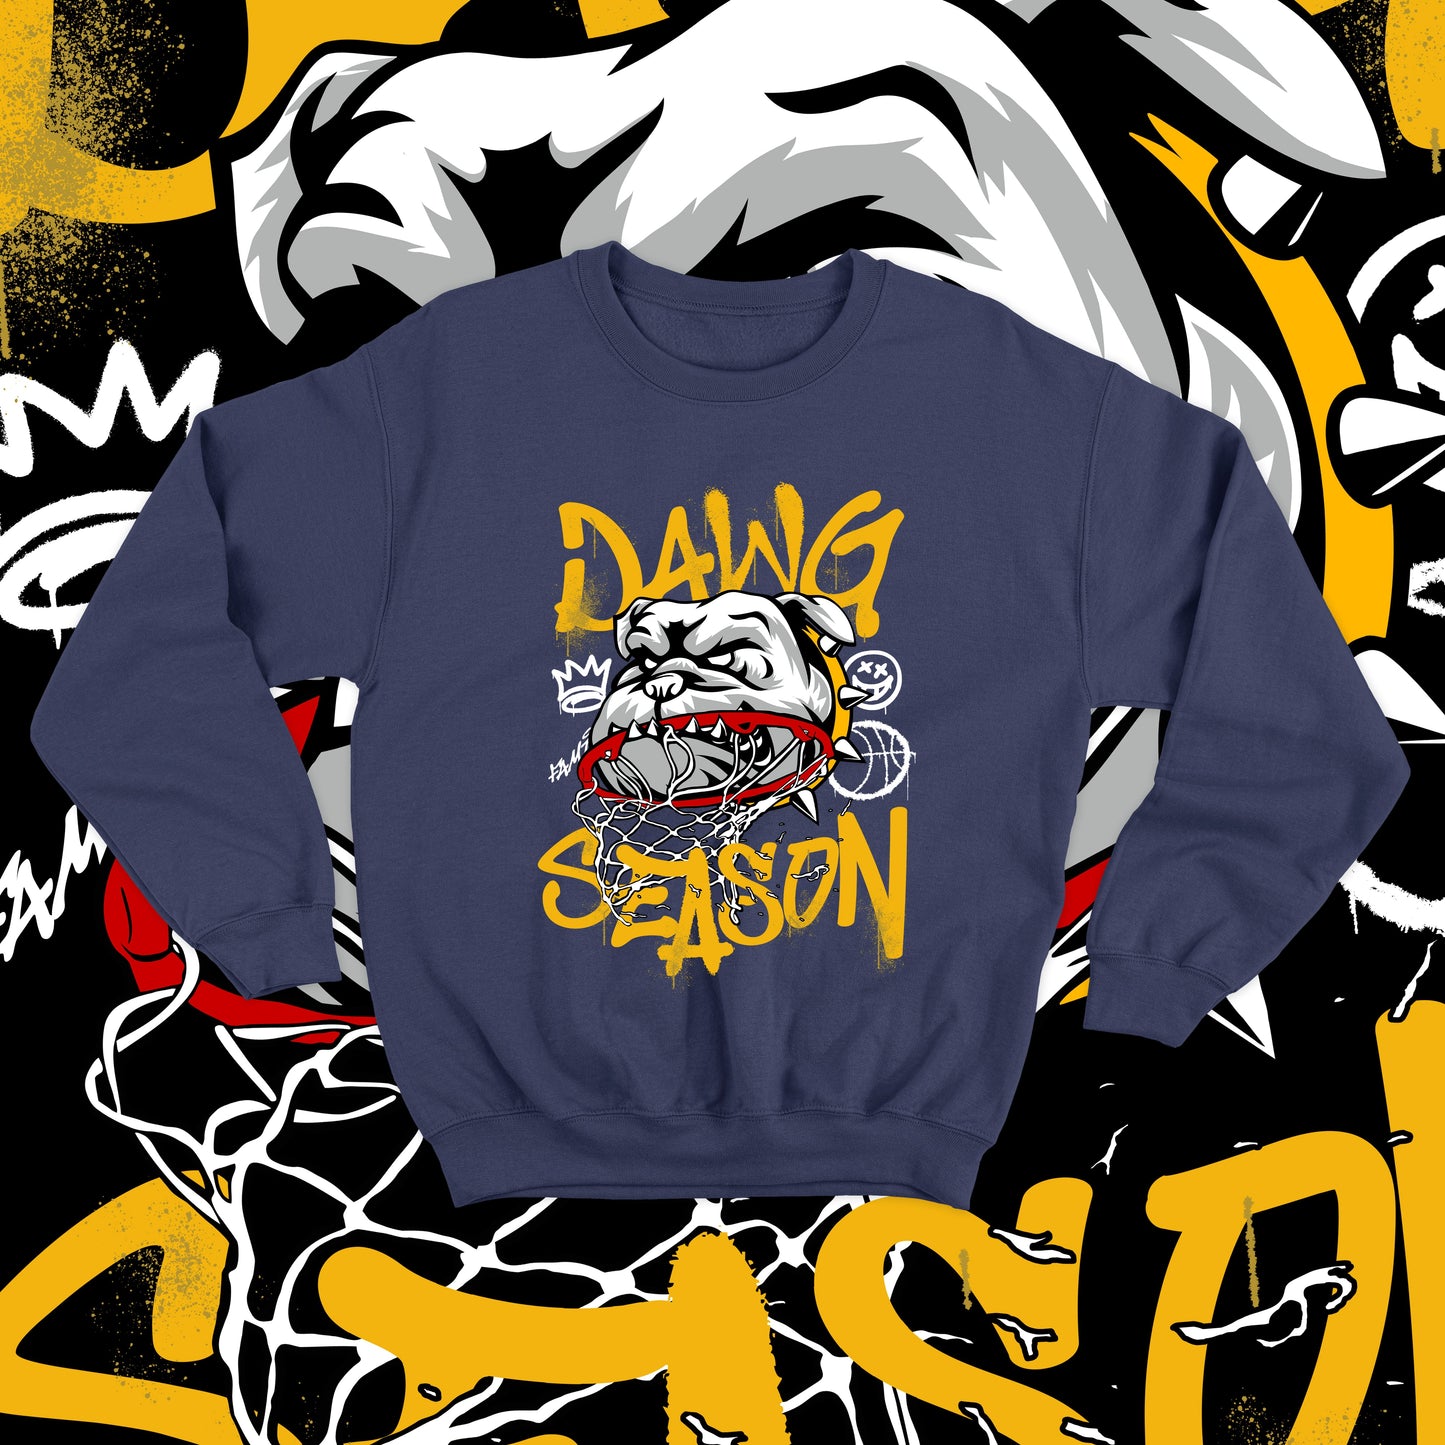 Aggie - Dawg Season - Crewneck Sweatshirt-DaPrintFactory